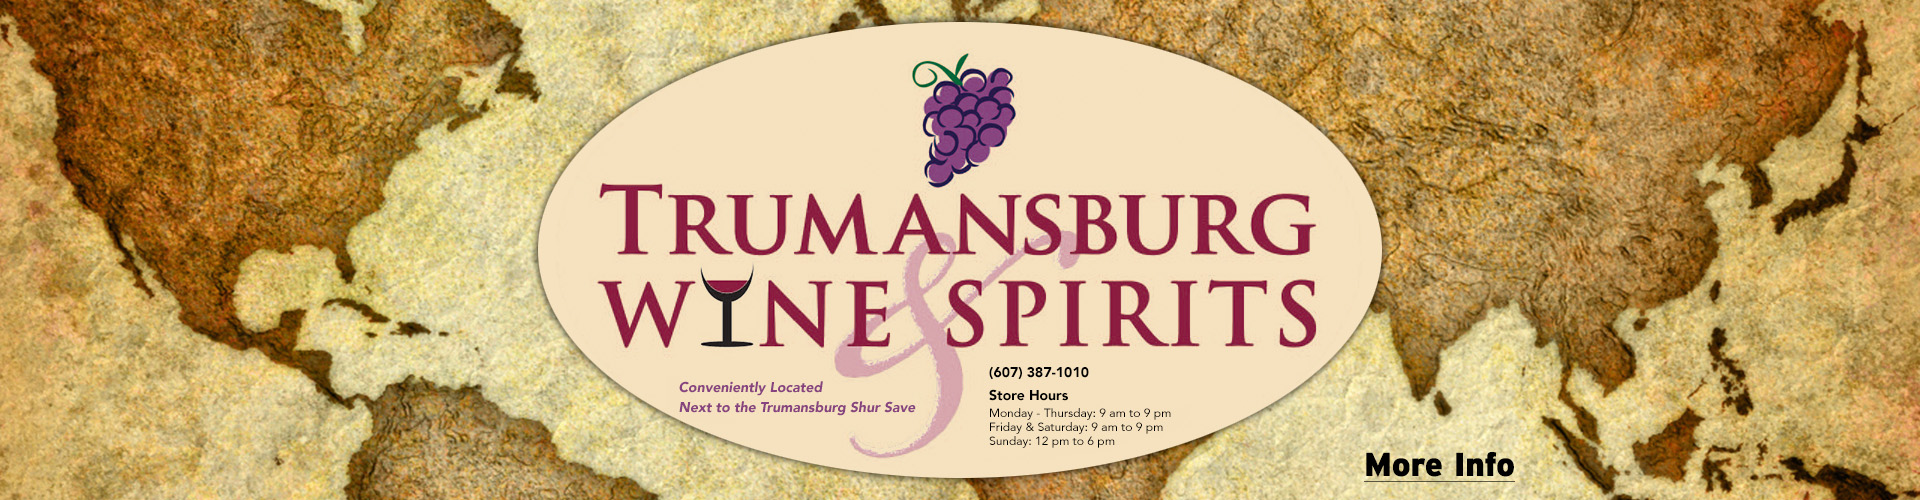 Trumansburg Wine Spirits